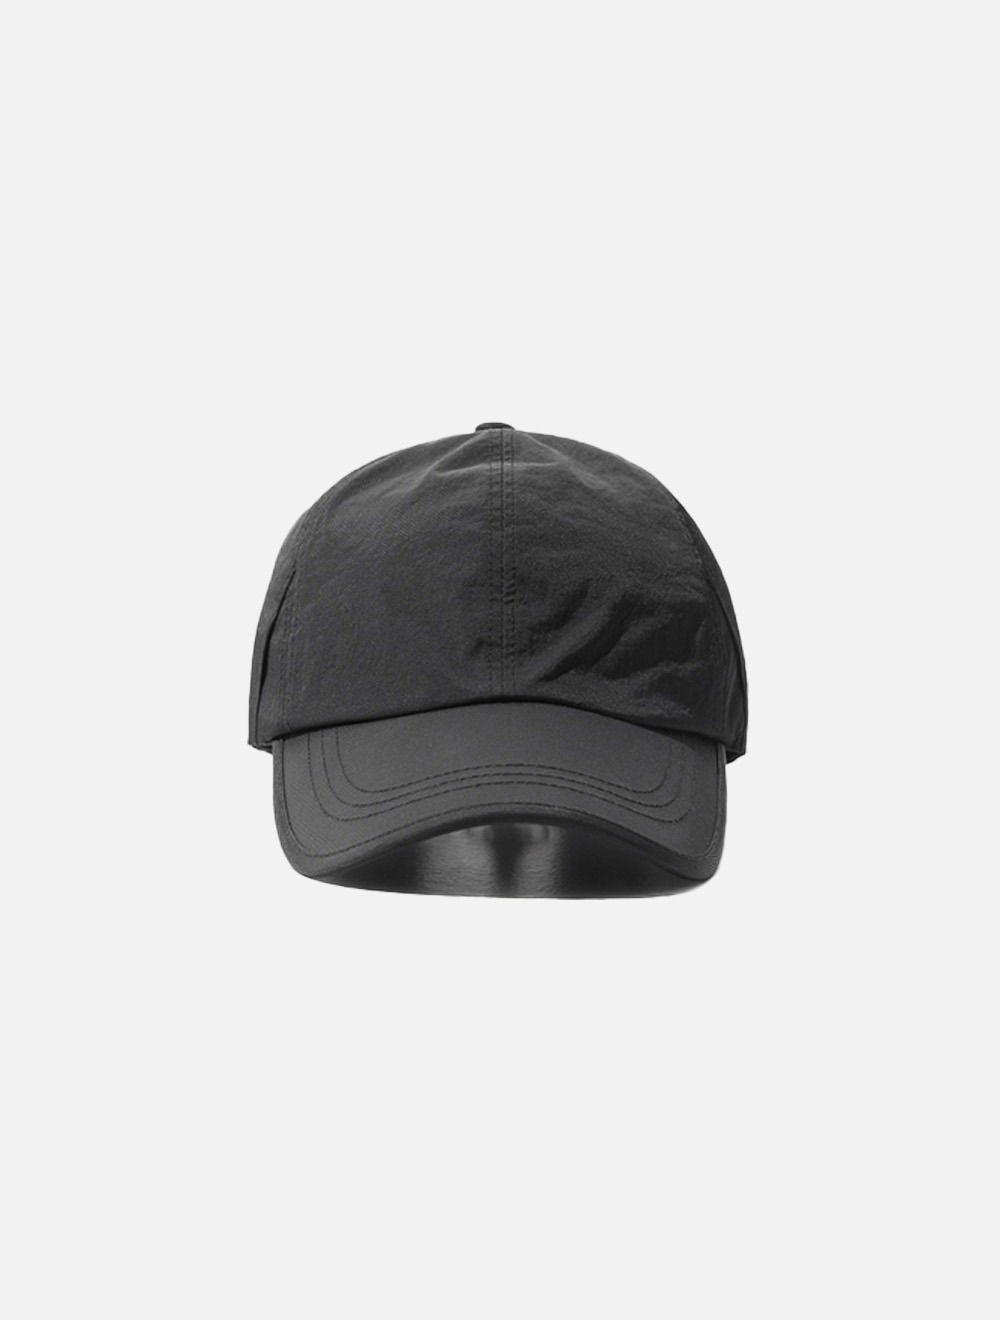 OPTICIAN CAP 2.0 (Black)